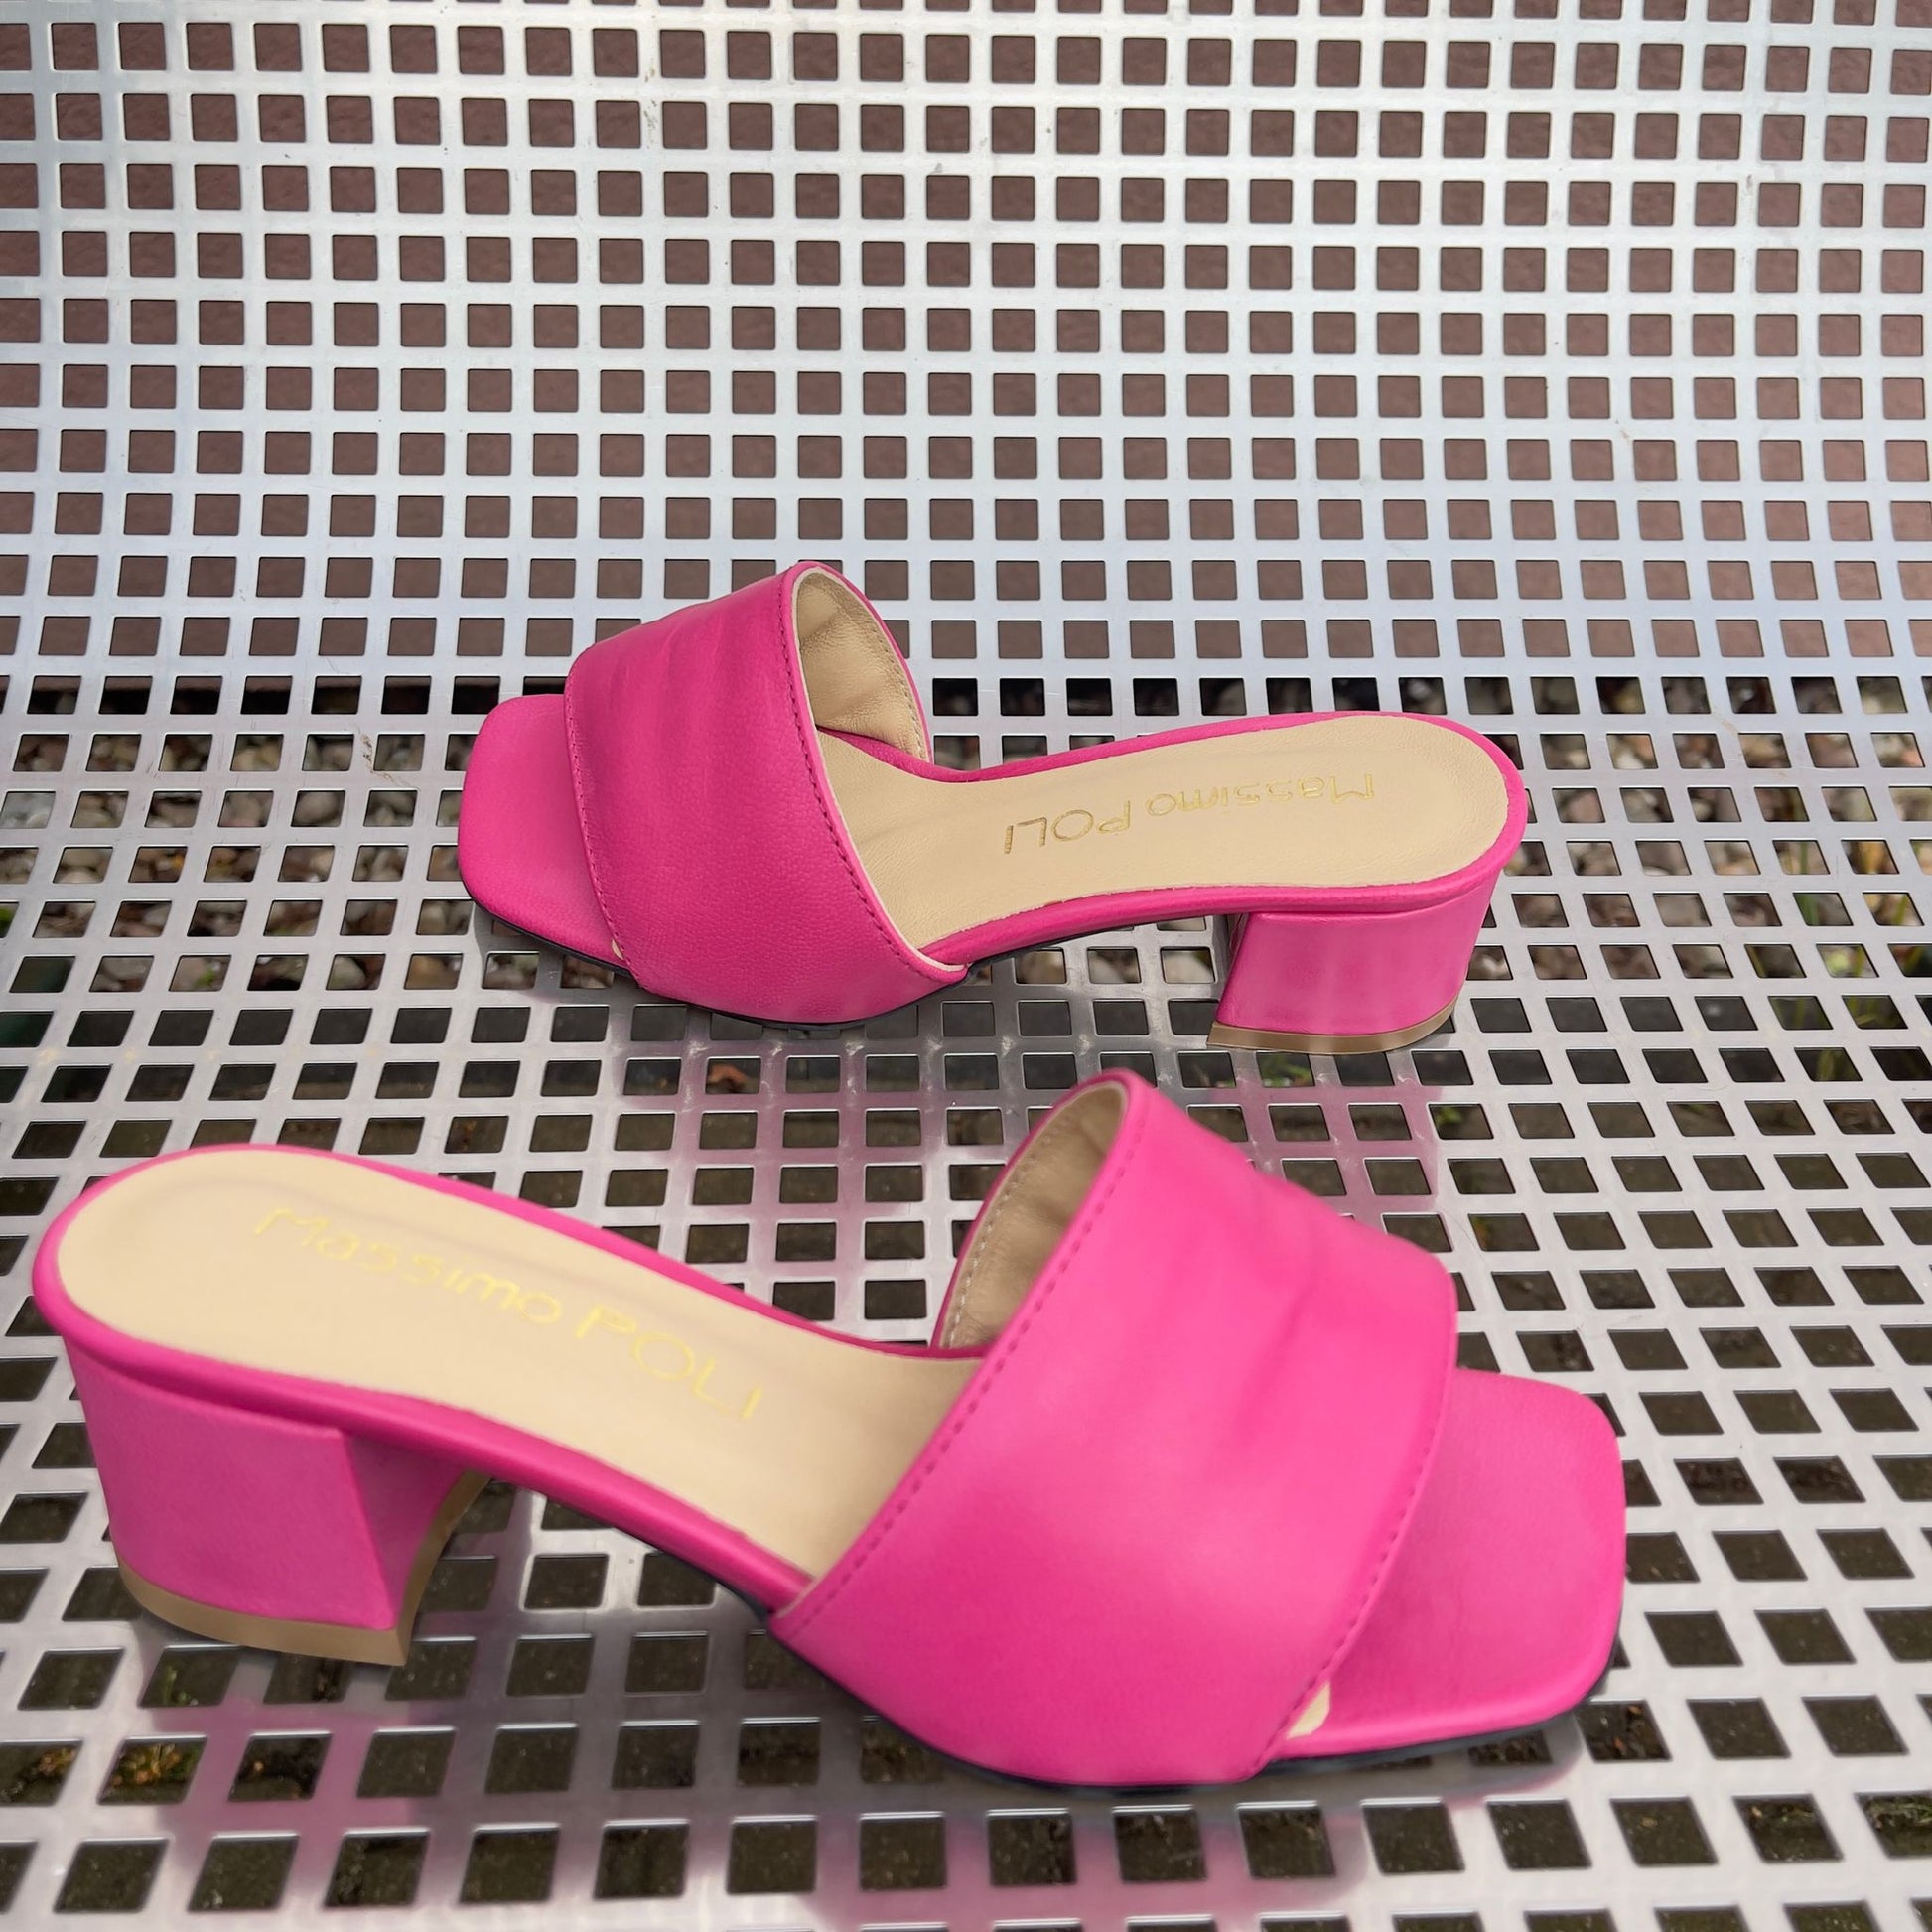 Hot pink leather ladies slider shoes set on a kitten heel